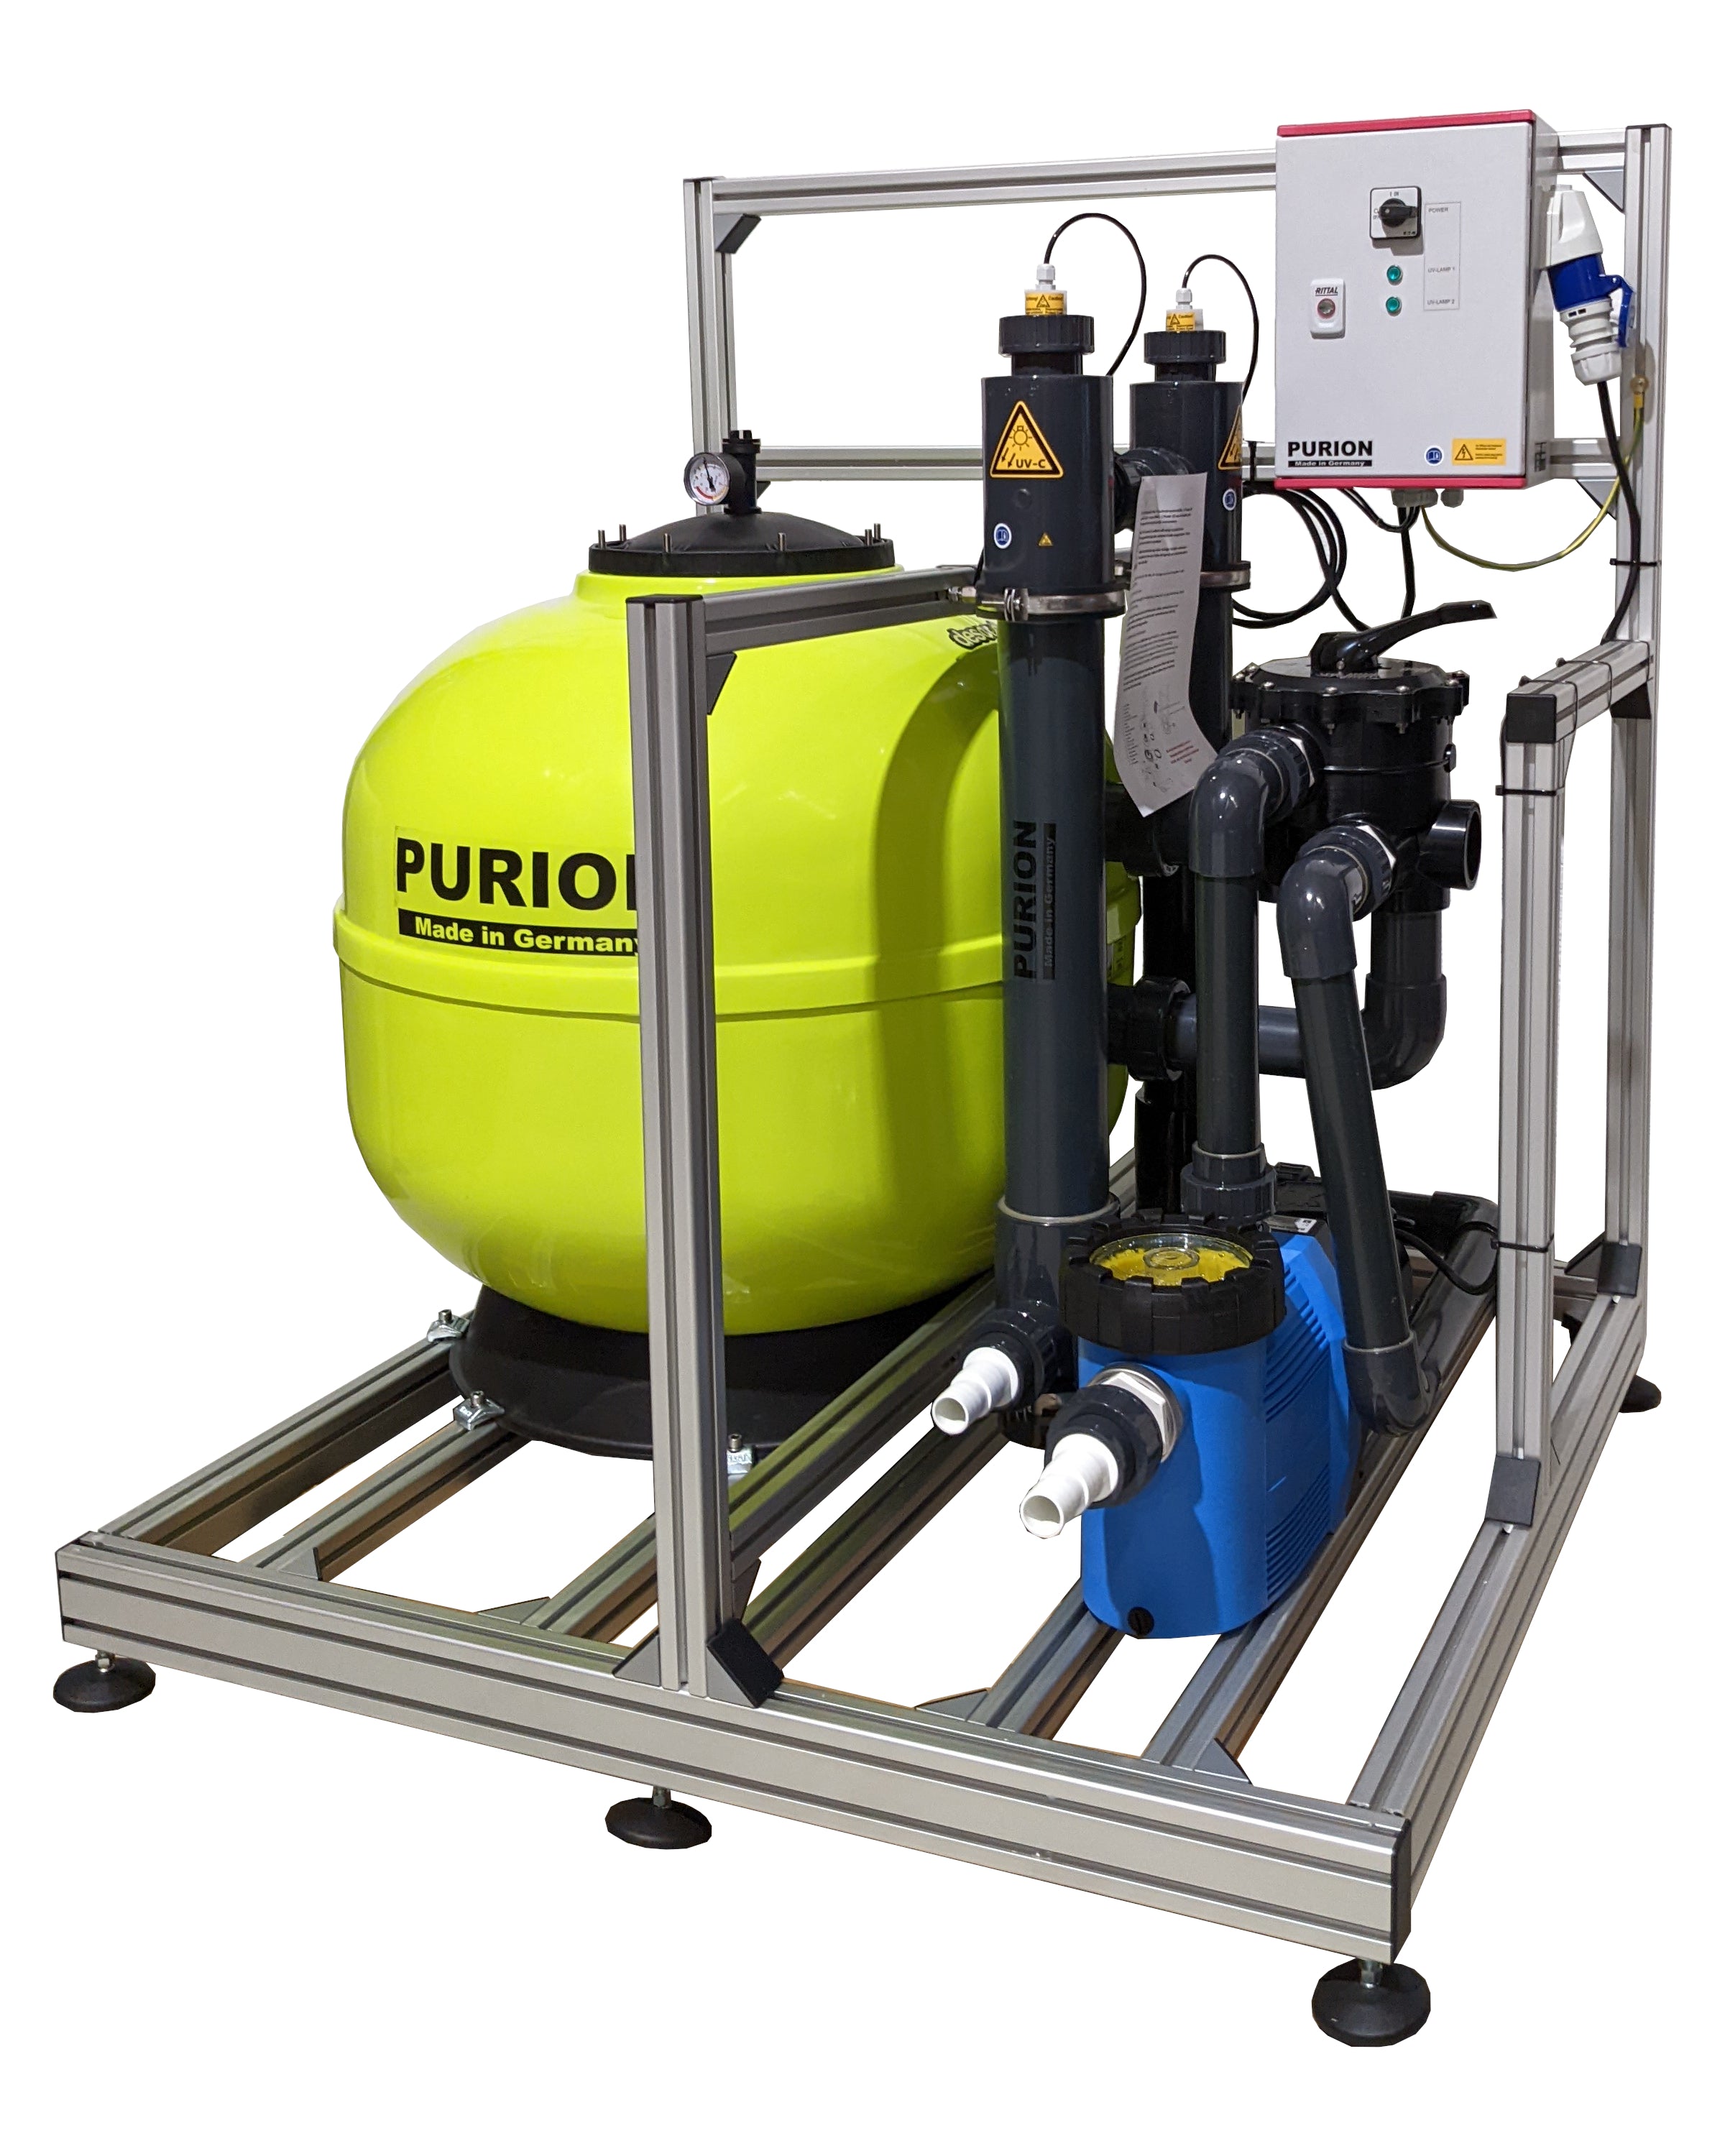 PURION Pool Luxury PVC-U hochwertiger Sandfilter UV-basierte Desinfektion.
Markenname: UV Concept GmbH